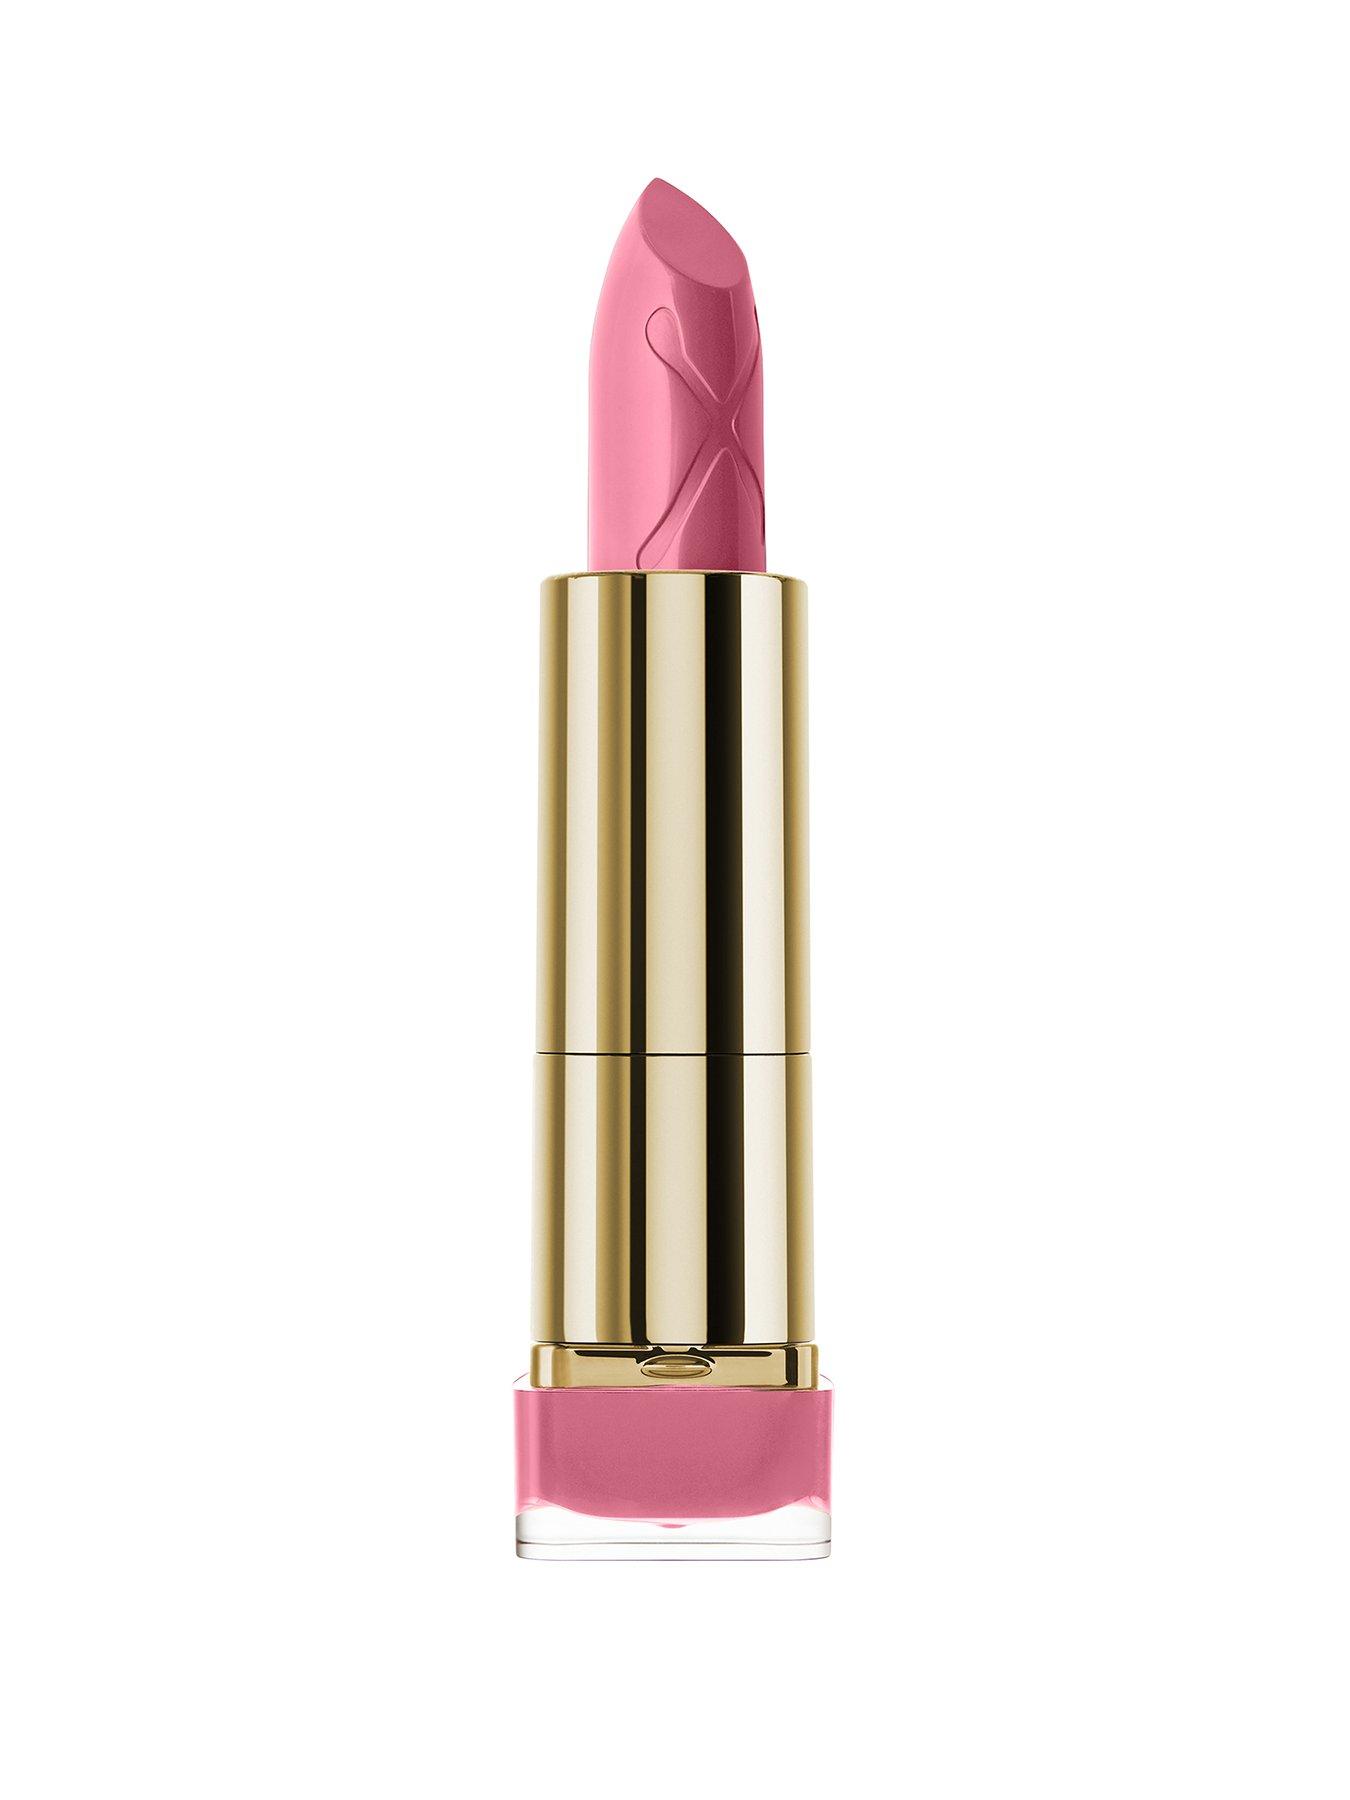 NYX PROFESSIONAL MAKEUP Shine Loud, Long-Lasting Liquid Lipstick with Clear  Lip Gloss - Magic Maker (Dusty Nude Mauve) 